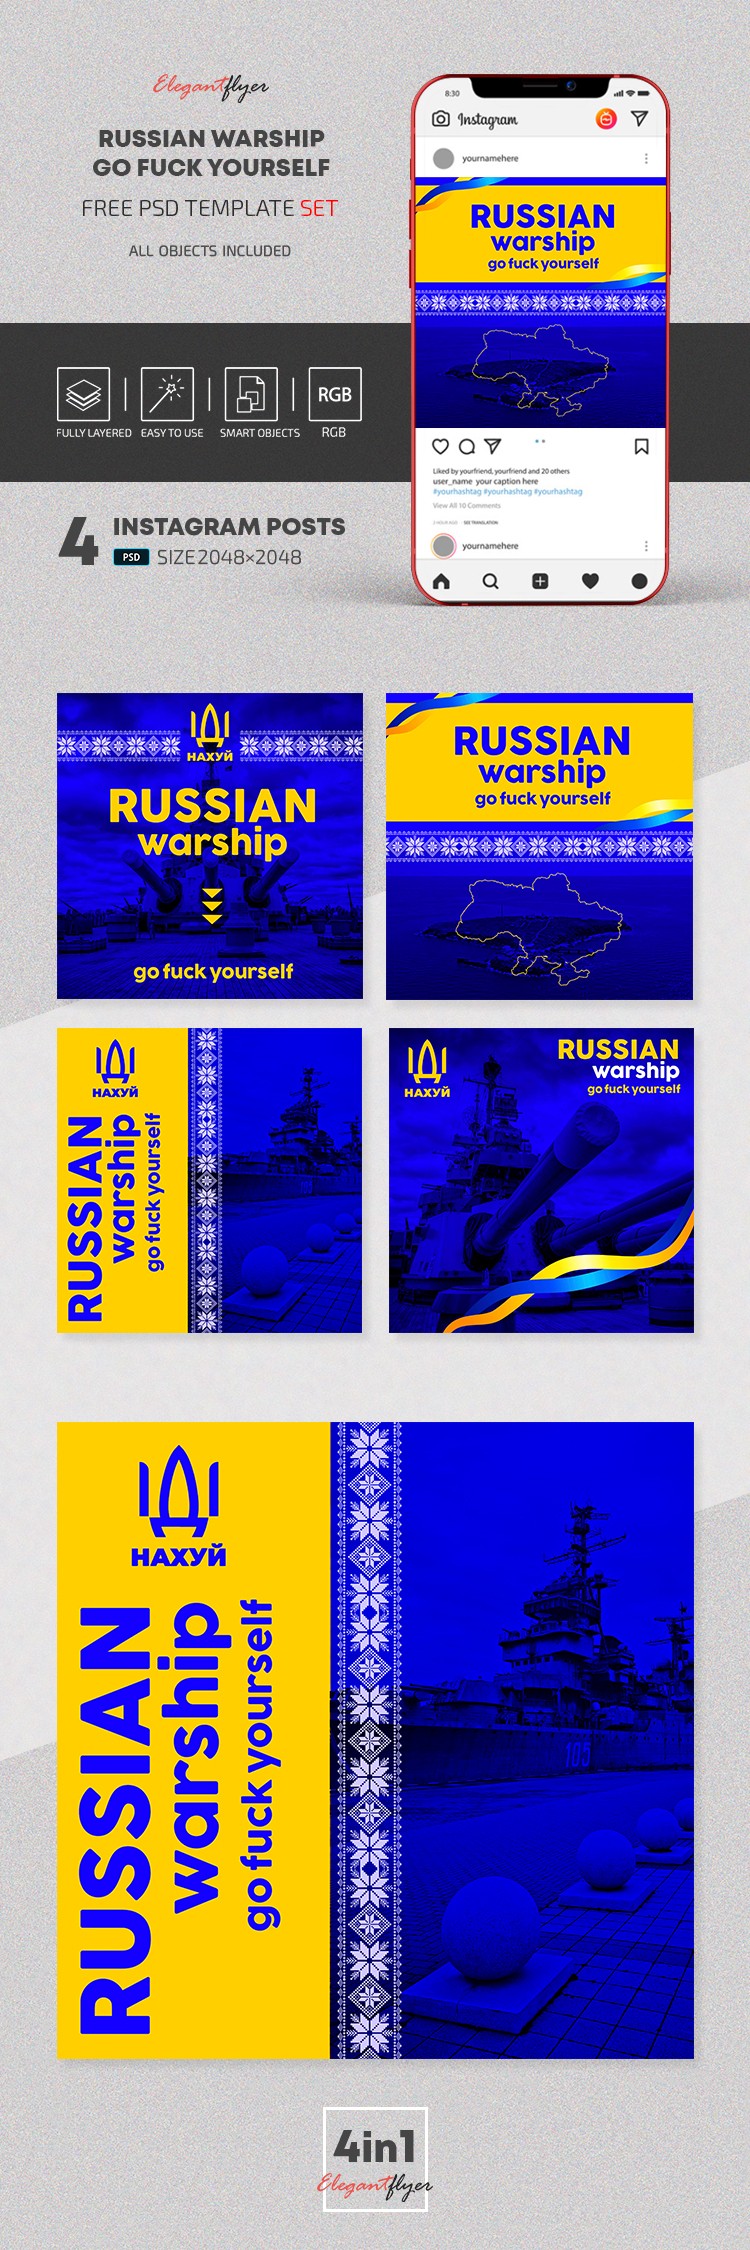 Russian Warship Go Fuck Yourself Instagram by ElegantFlyer